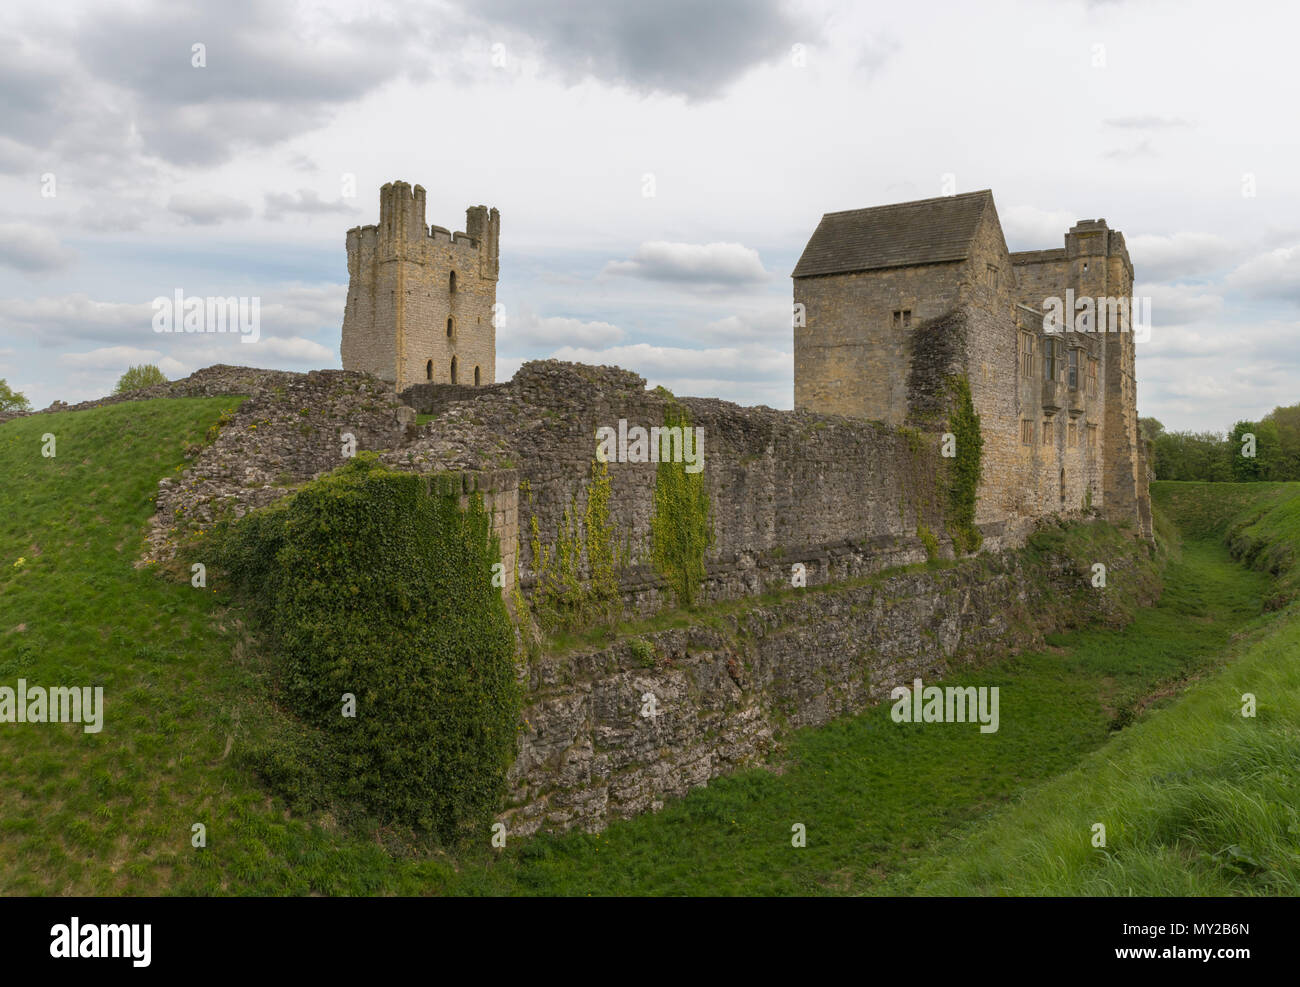 Castello di Helmsley, Helmsley, North Yorkshire Moors, North Yorkshire, Inghilterra Foto Stock